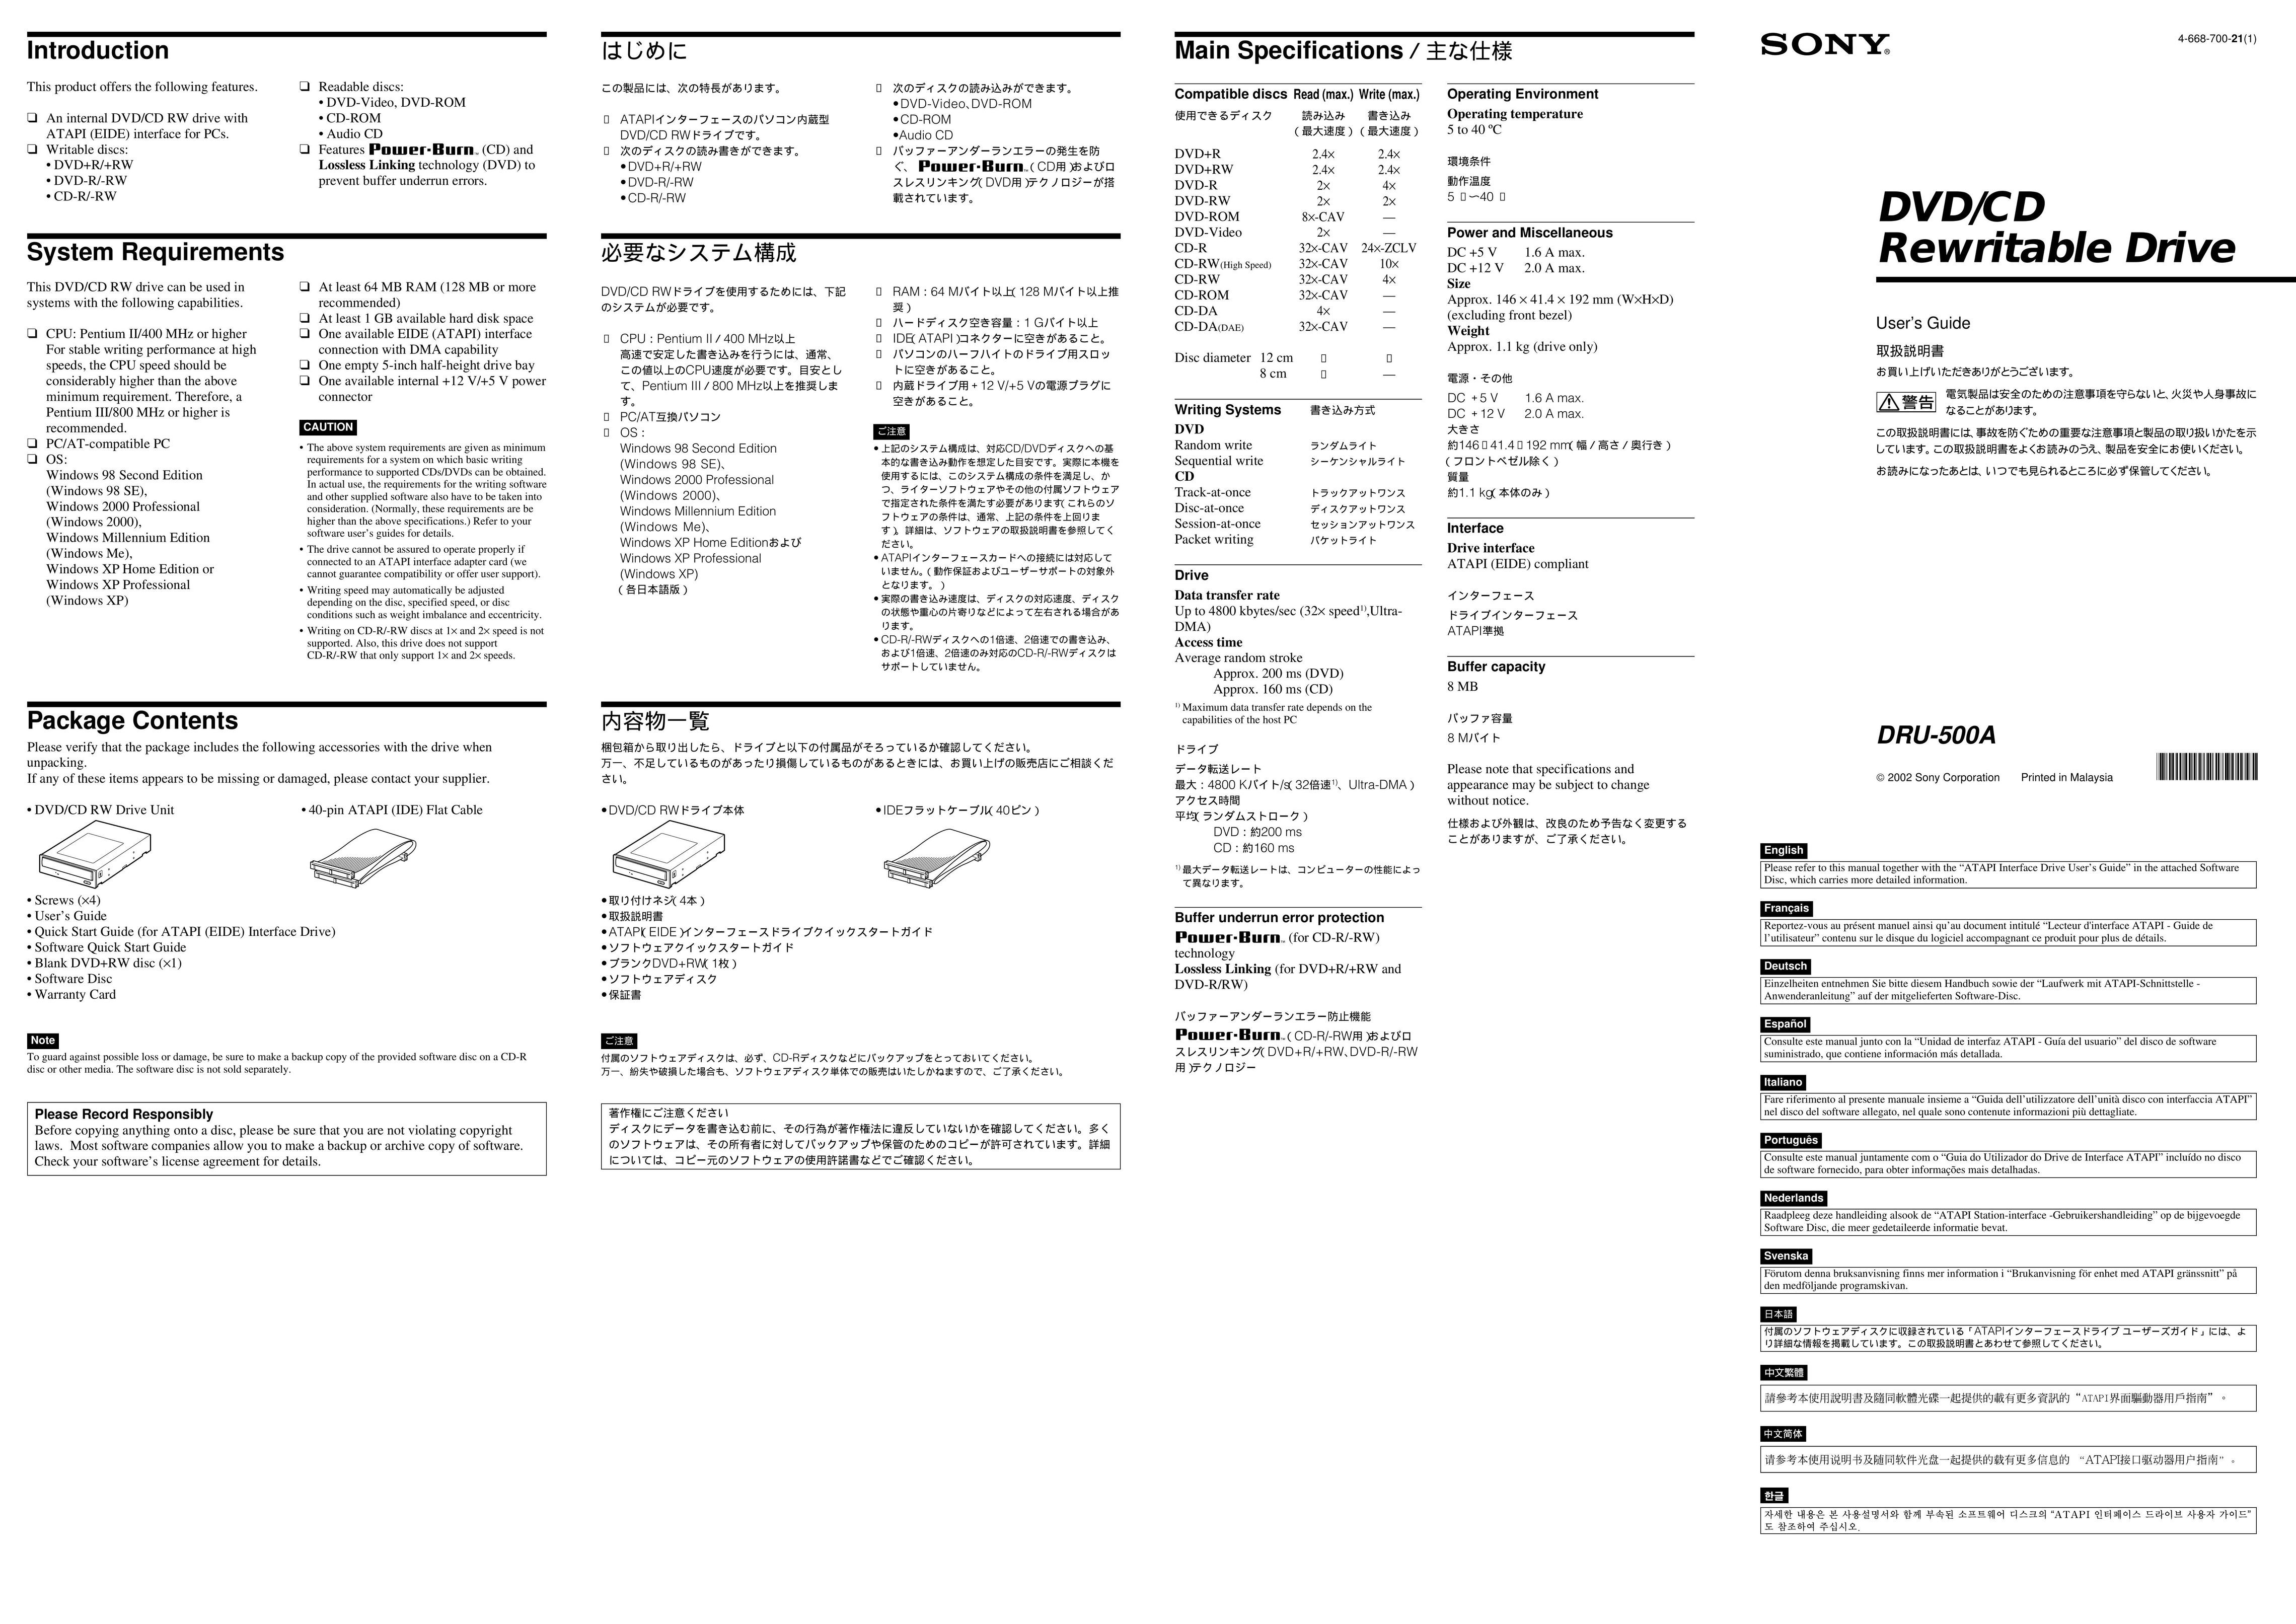 Sony DRU-500A Computer Drive User Manual